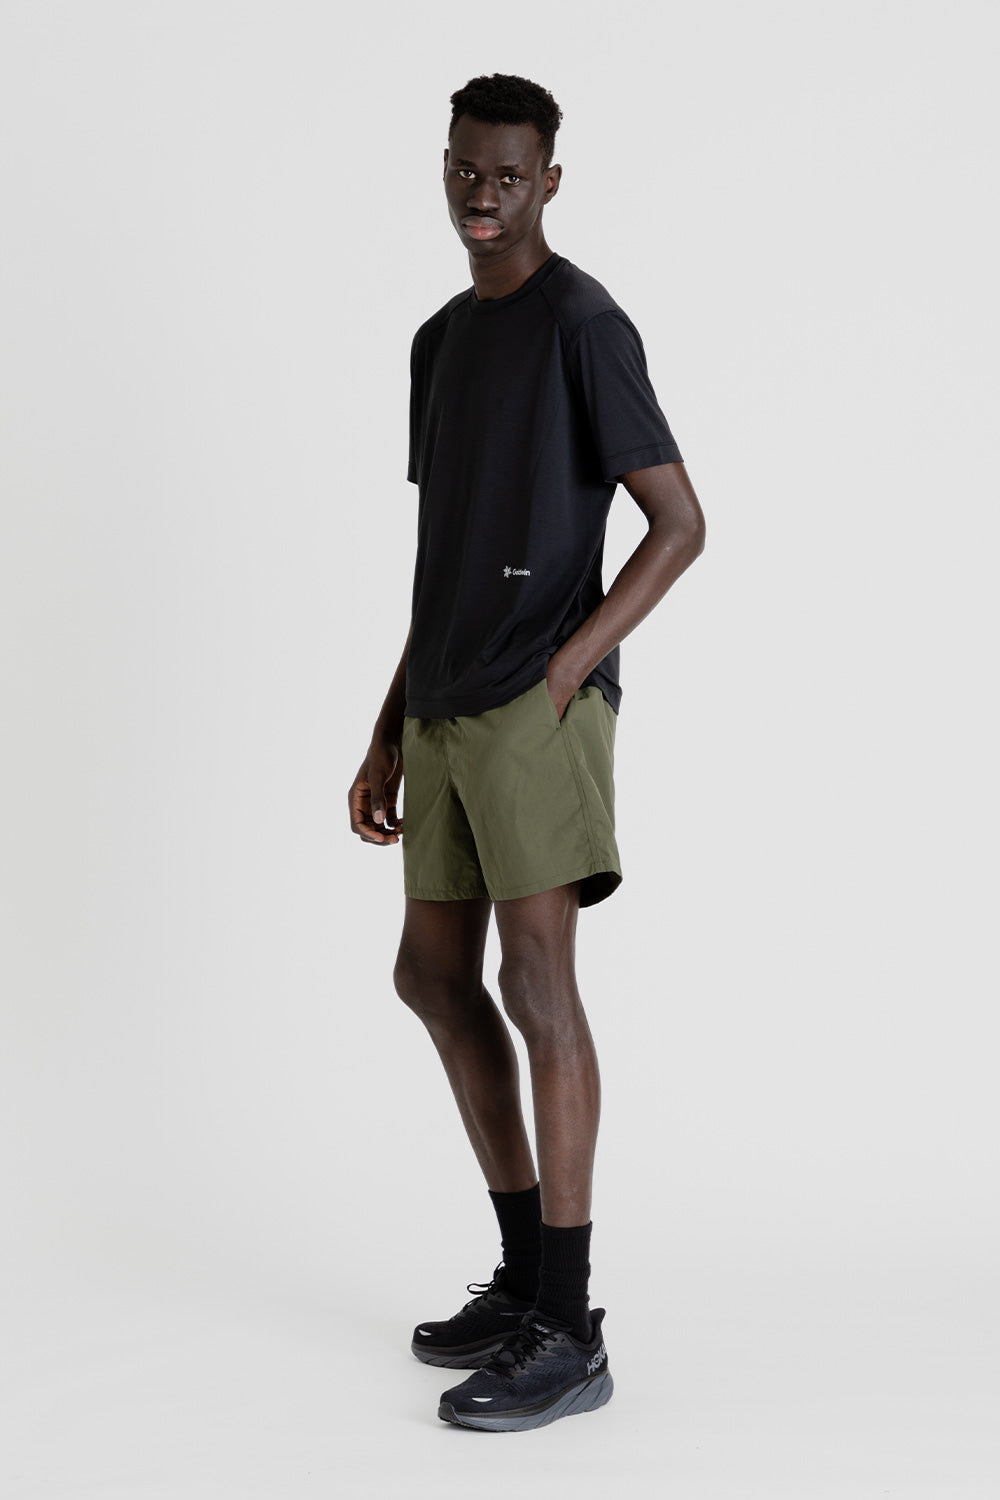 goldwin-nylon-shorts-5-inches-olive-green